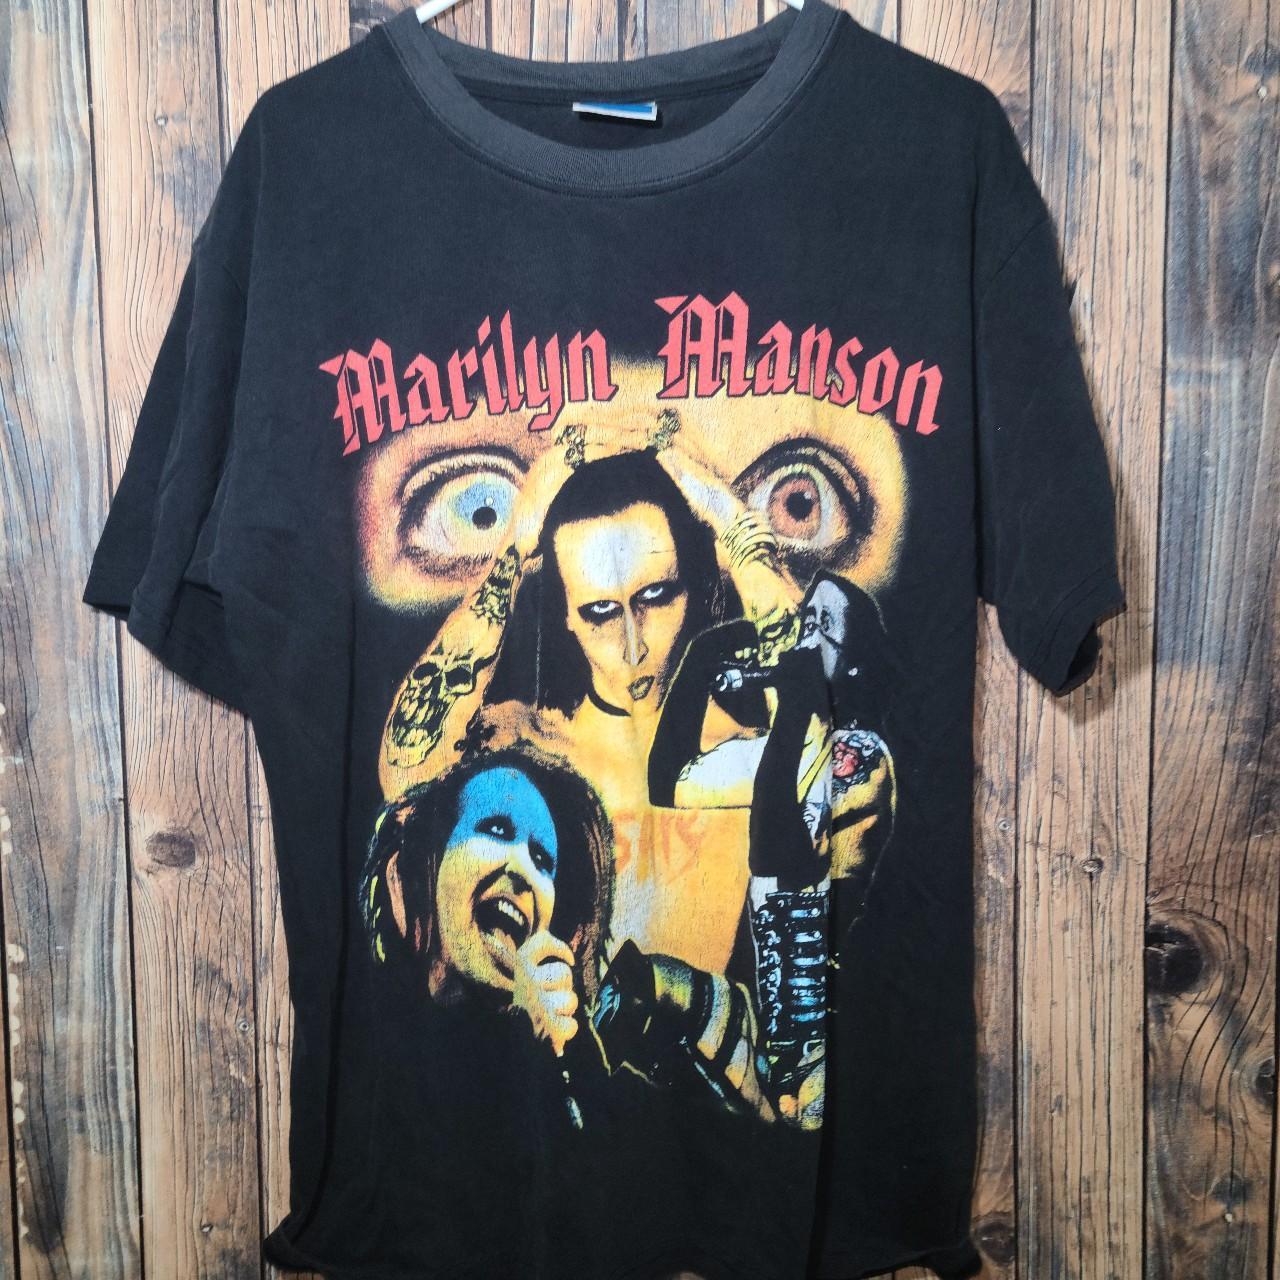 Marilyn Manson rock band tee shirt - Depop